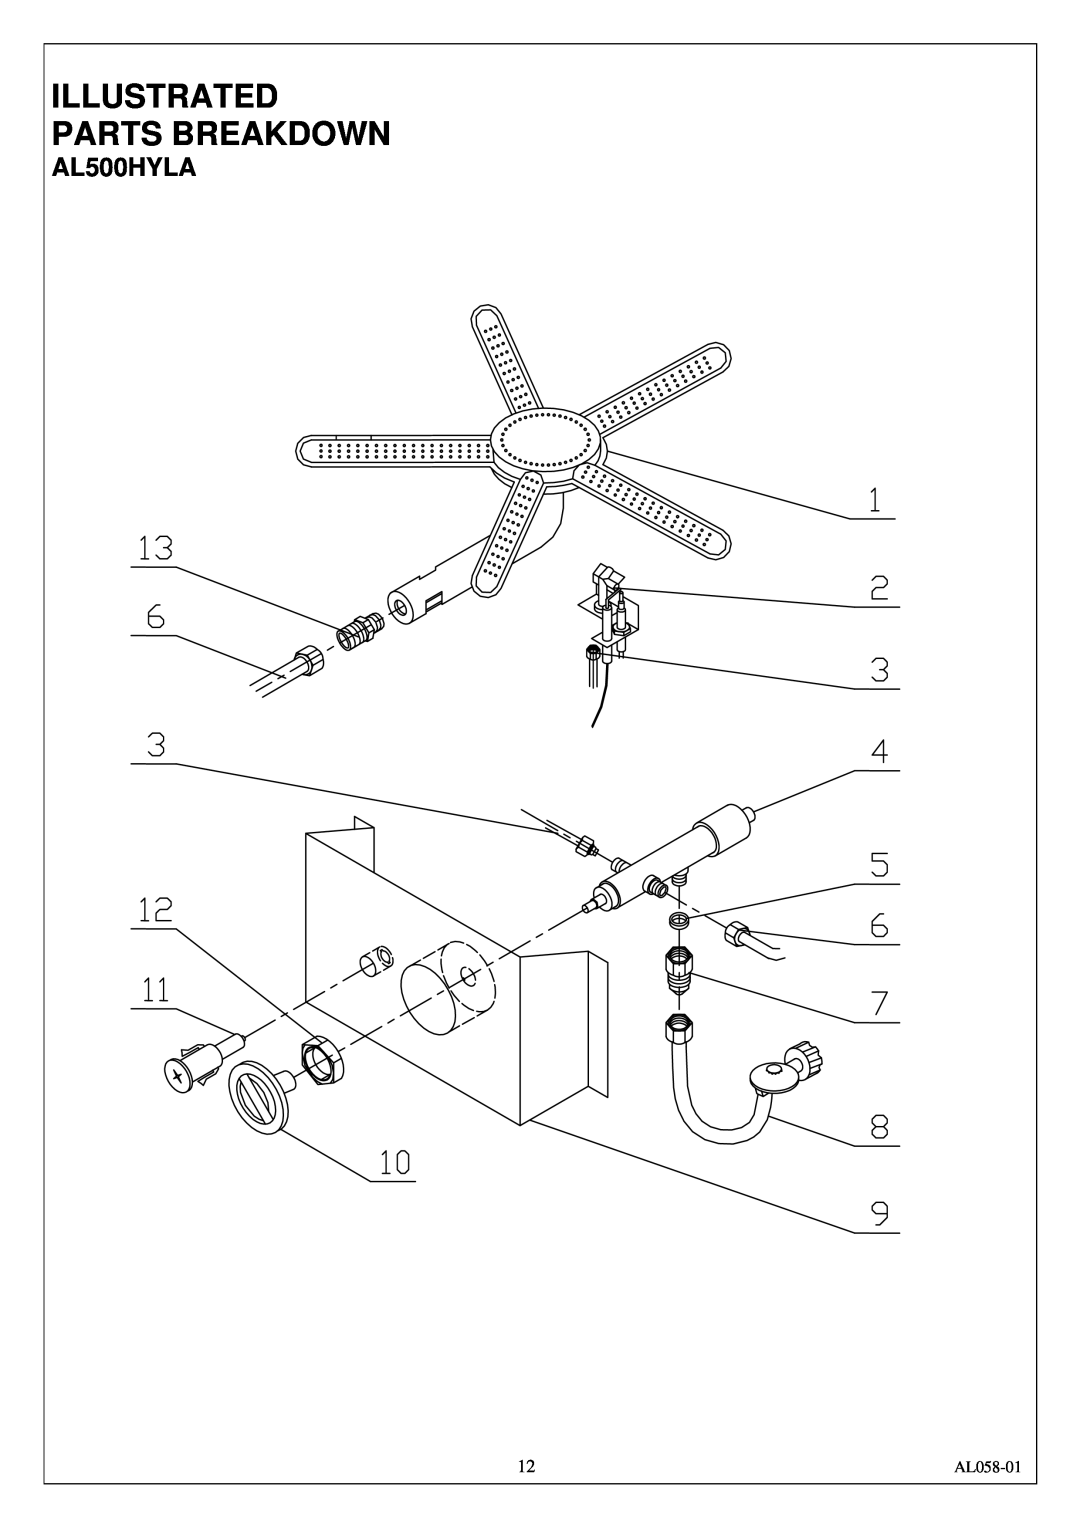 Procom AL500HYLA installation manual Illustrated, Parts Breakdown, AL058-01 